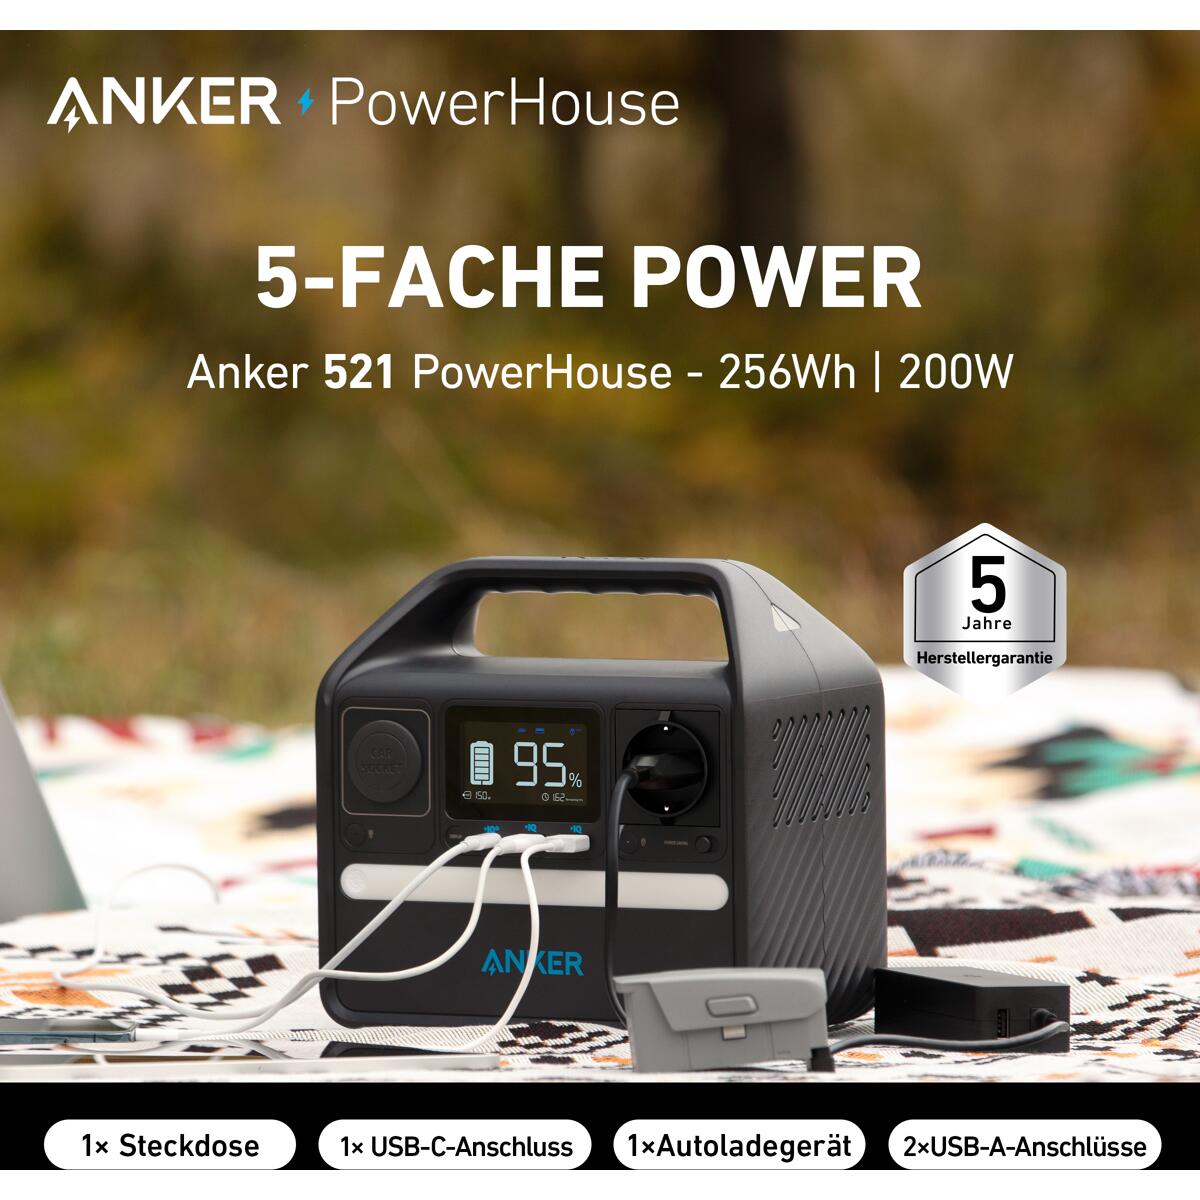 Anker PowerHouse - その他